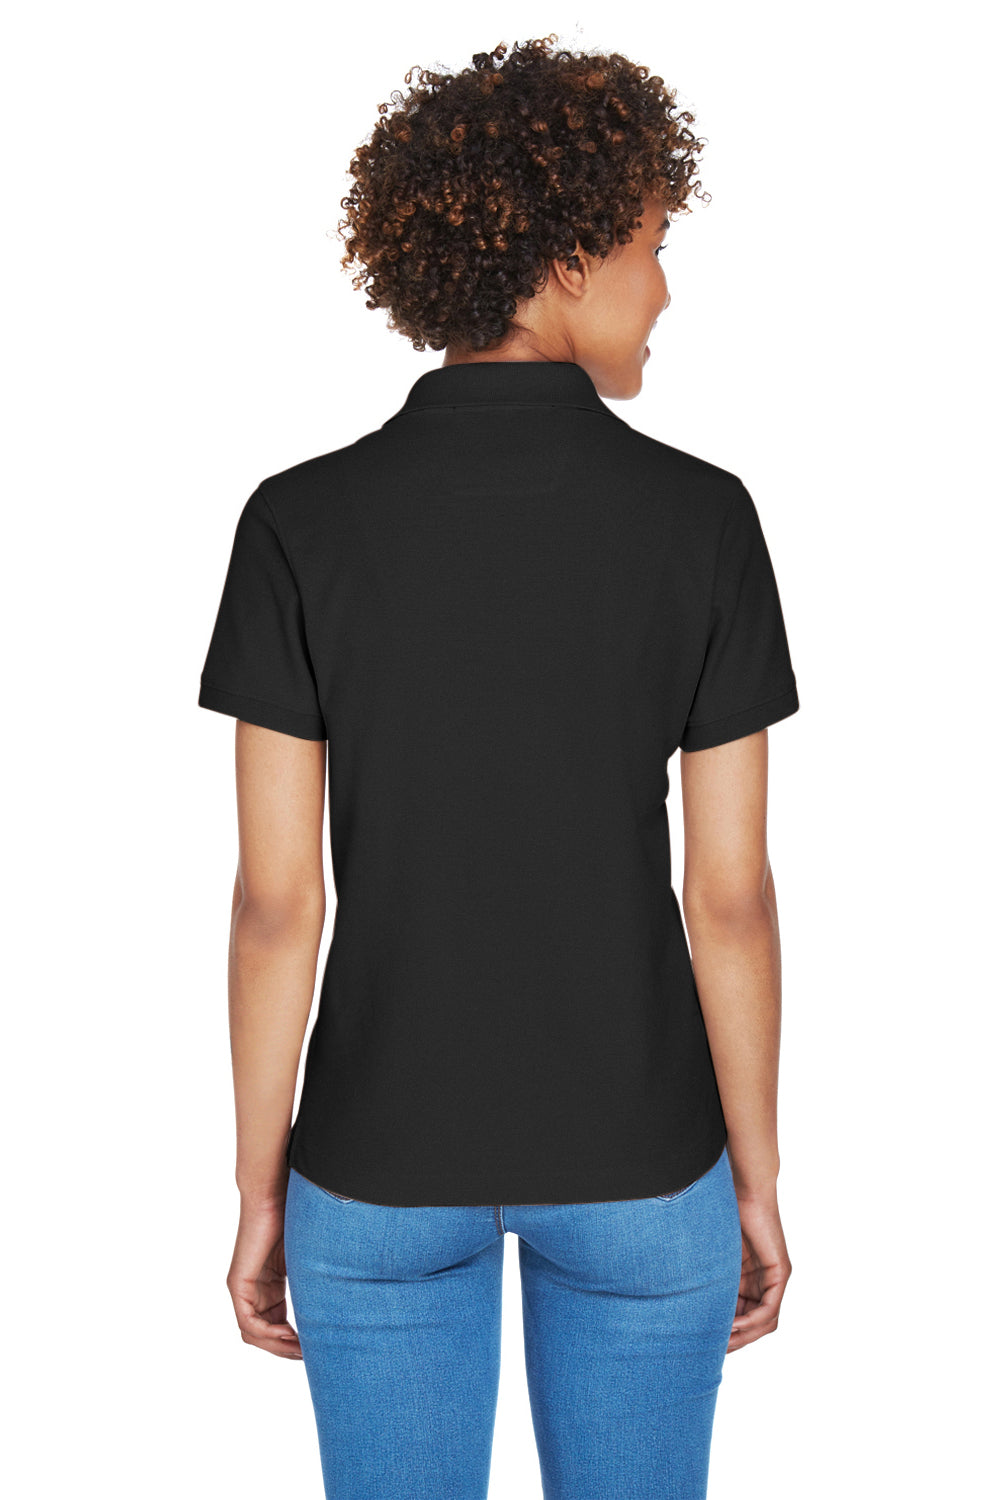 Devon & Jones D100W Womens Short Sleeve Polo Shirt Black Back